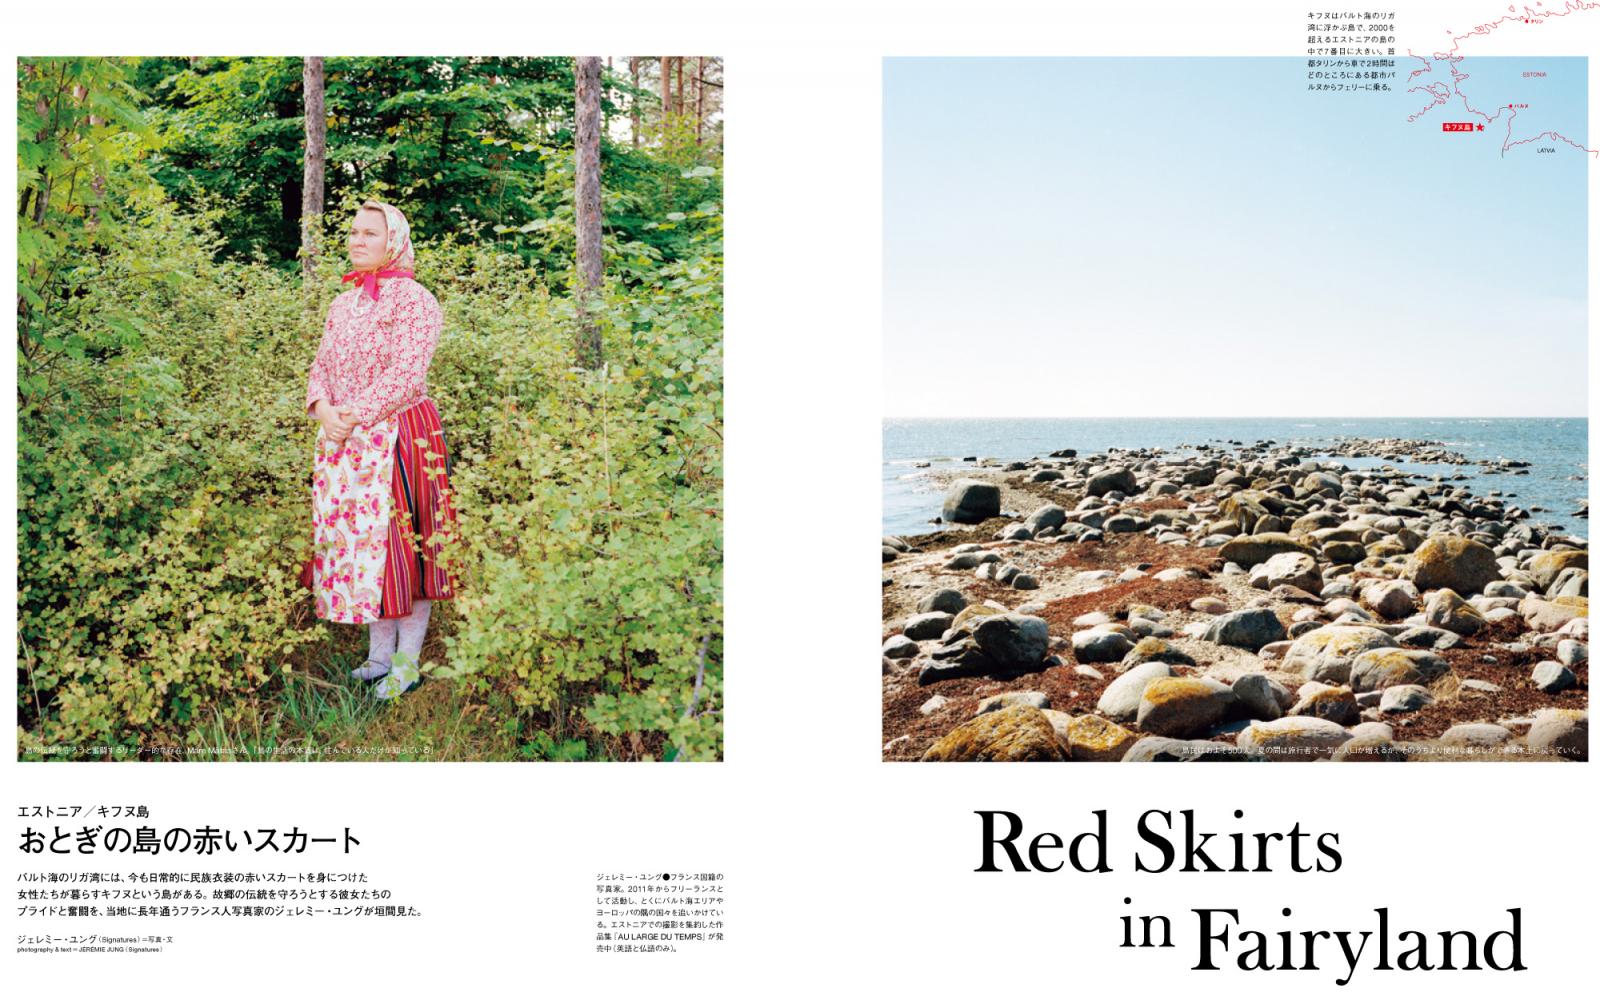 The Kihnu "Red Skirts" in Transit Magazine